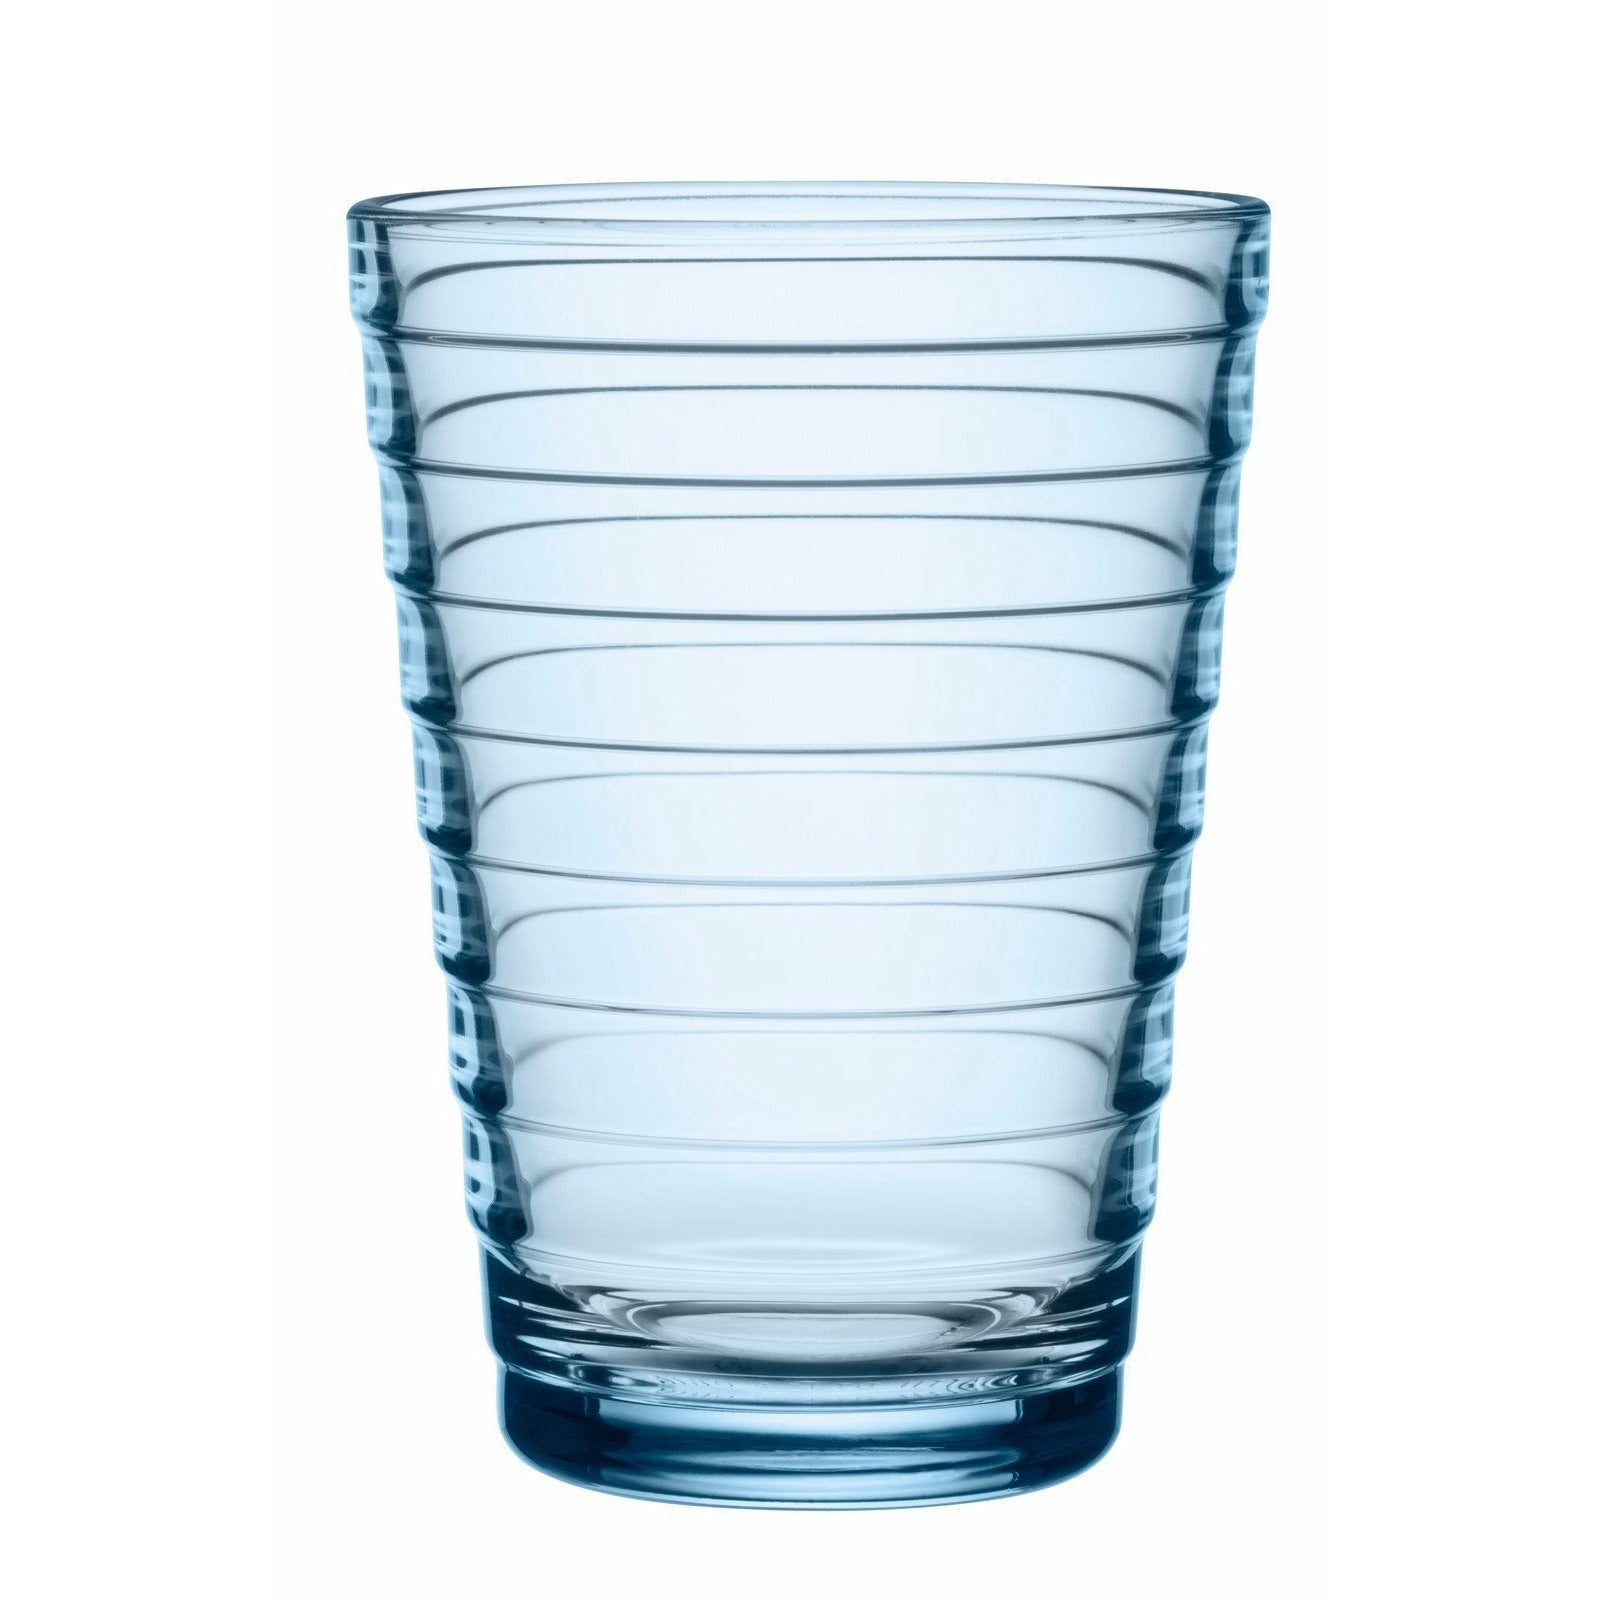 Iittala aino aalto drinkglas aqua 33cl, 2 stks.